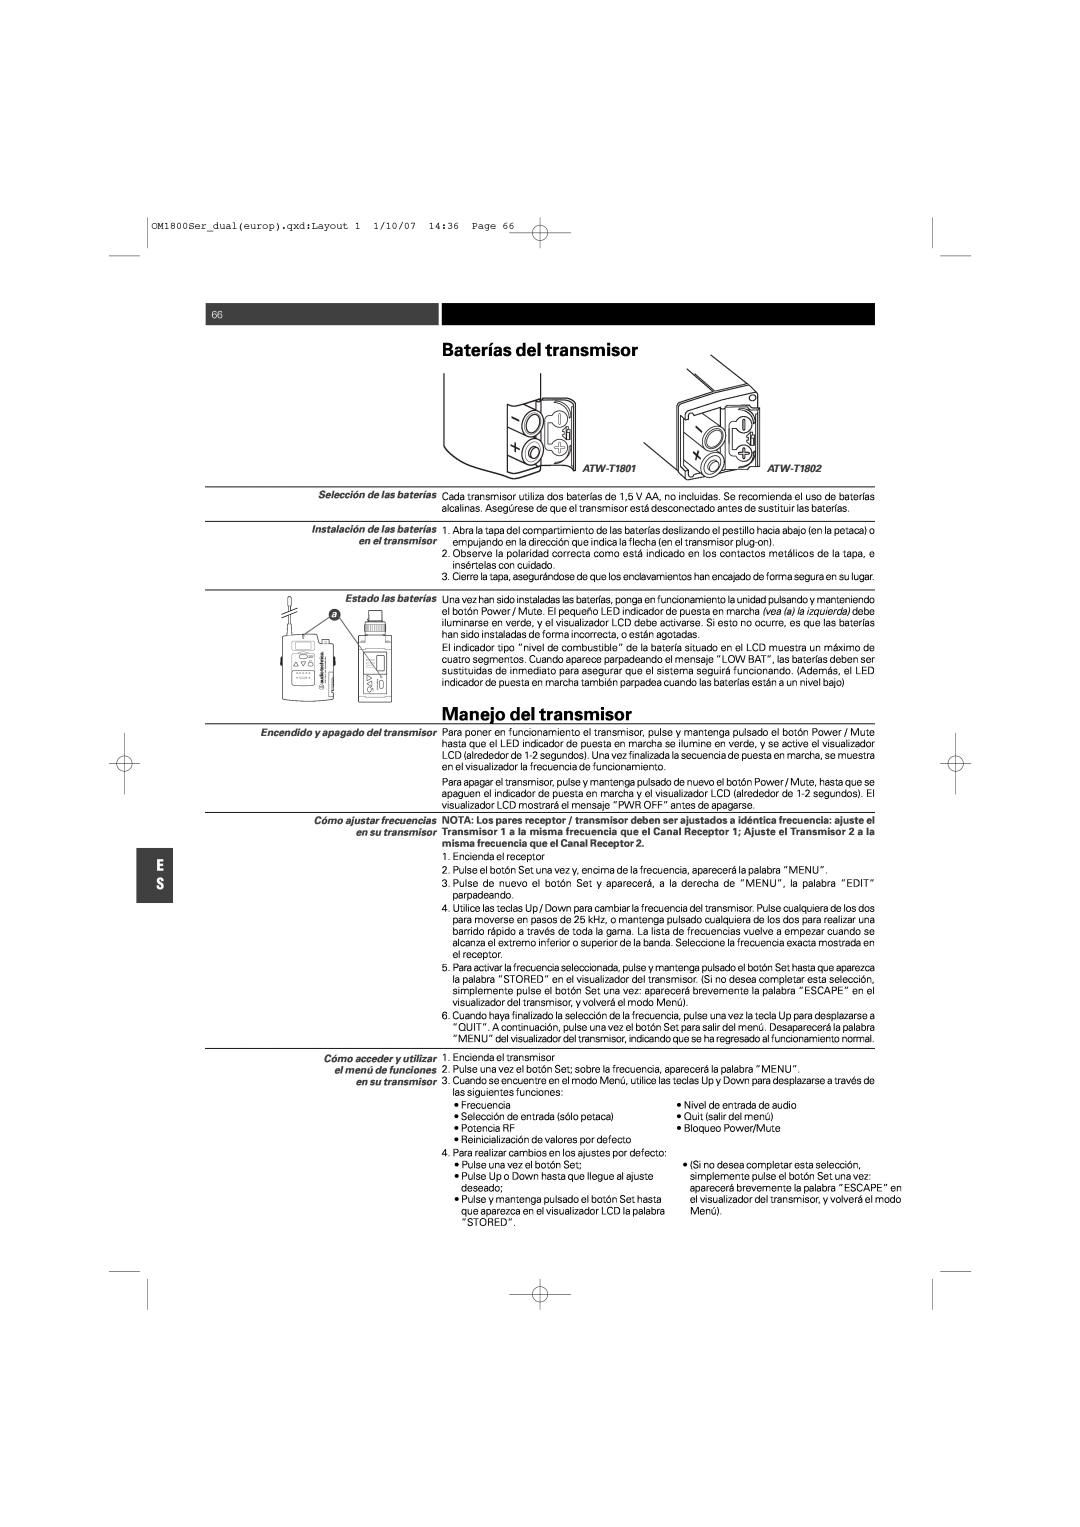 Audio-Technica ATW-T1820 manual Baterías del transmisor, Manejo del transmisor, Estado las baterías, ATW-T1801 